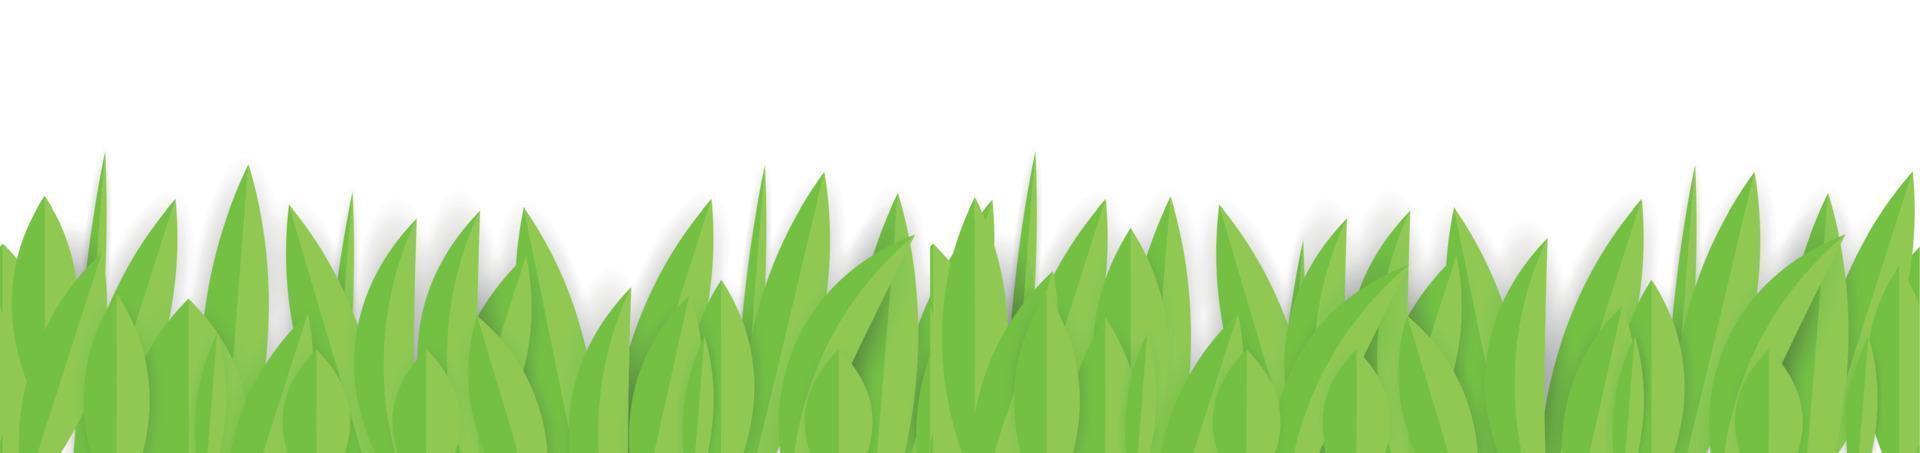 grönt papper gräs horisontell sömlös kantdesign. vektor illustration